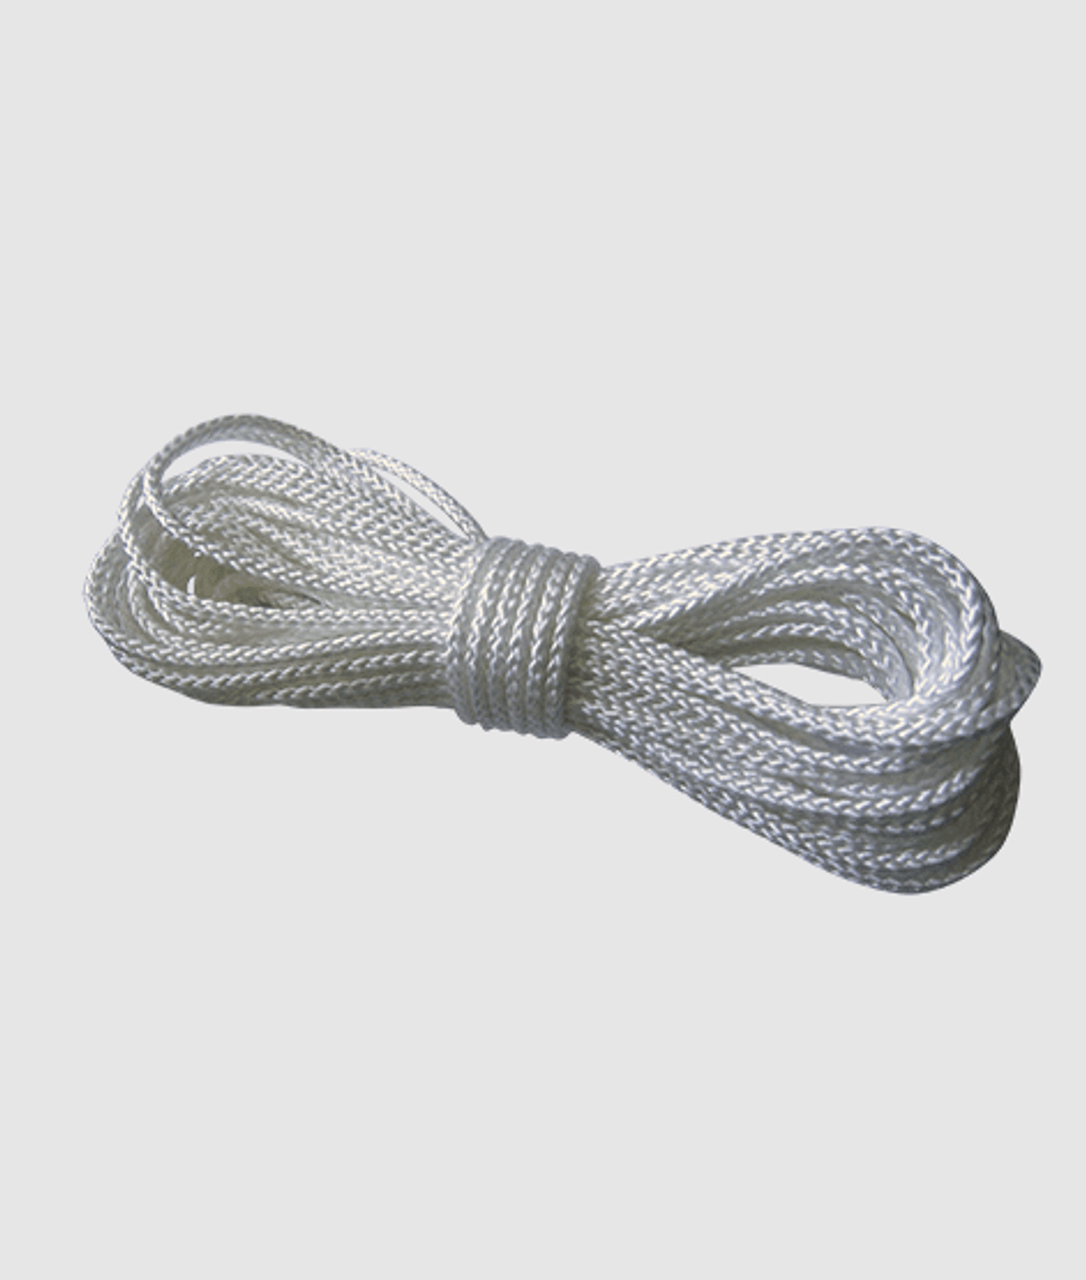 Nylon Rope, 50 ft